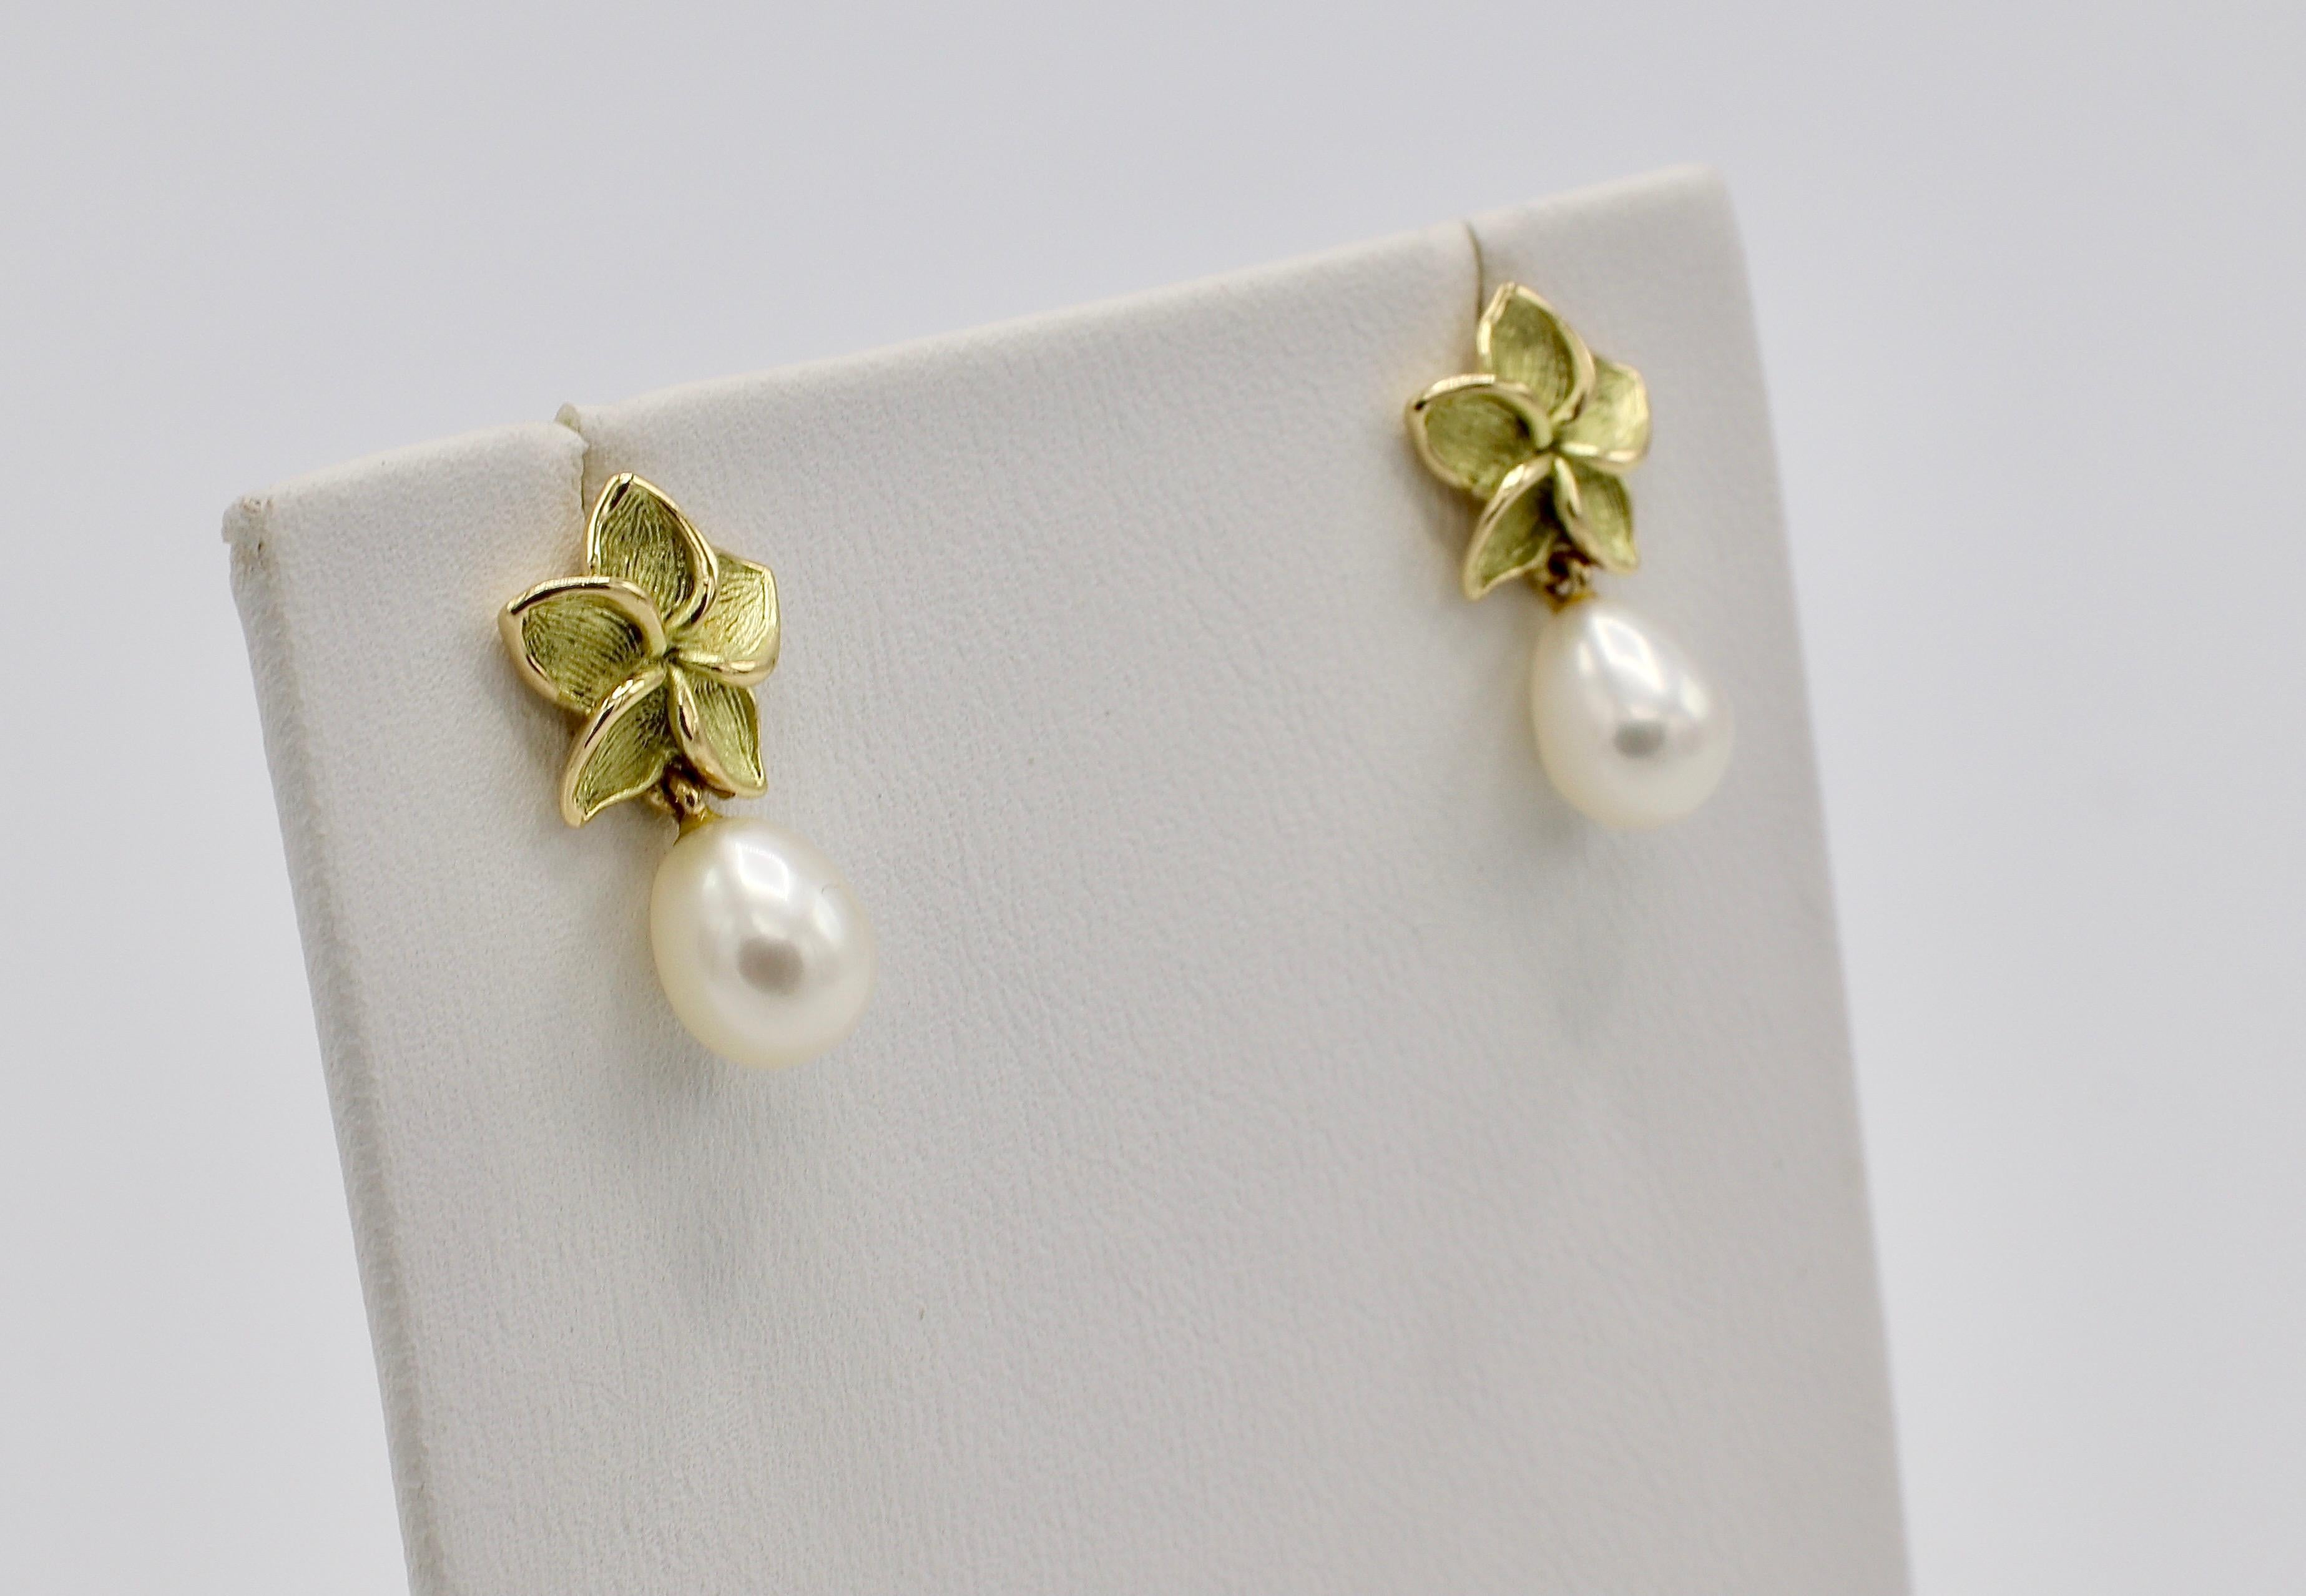 Tiffany & Co. Pulmeria 18 Karat Gold & Freshwater Pearl Flower Drop Earrings 
Metal: 18k yellow gold
Weight: 3.56 grams
Pearls: 6-6.5MM
Length: 18MM
Retail in 2003, $900 